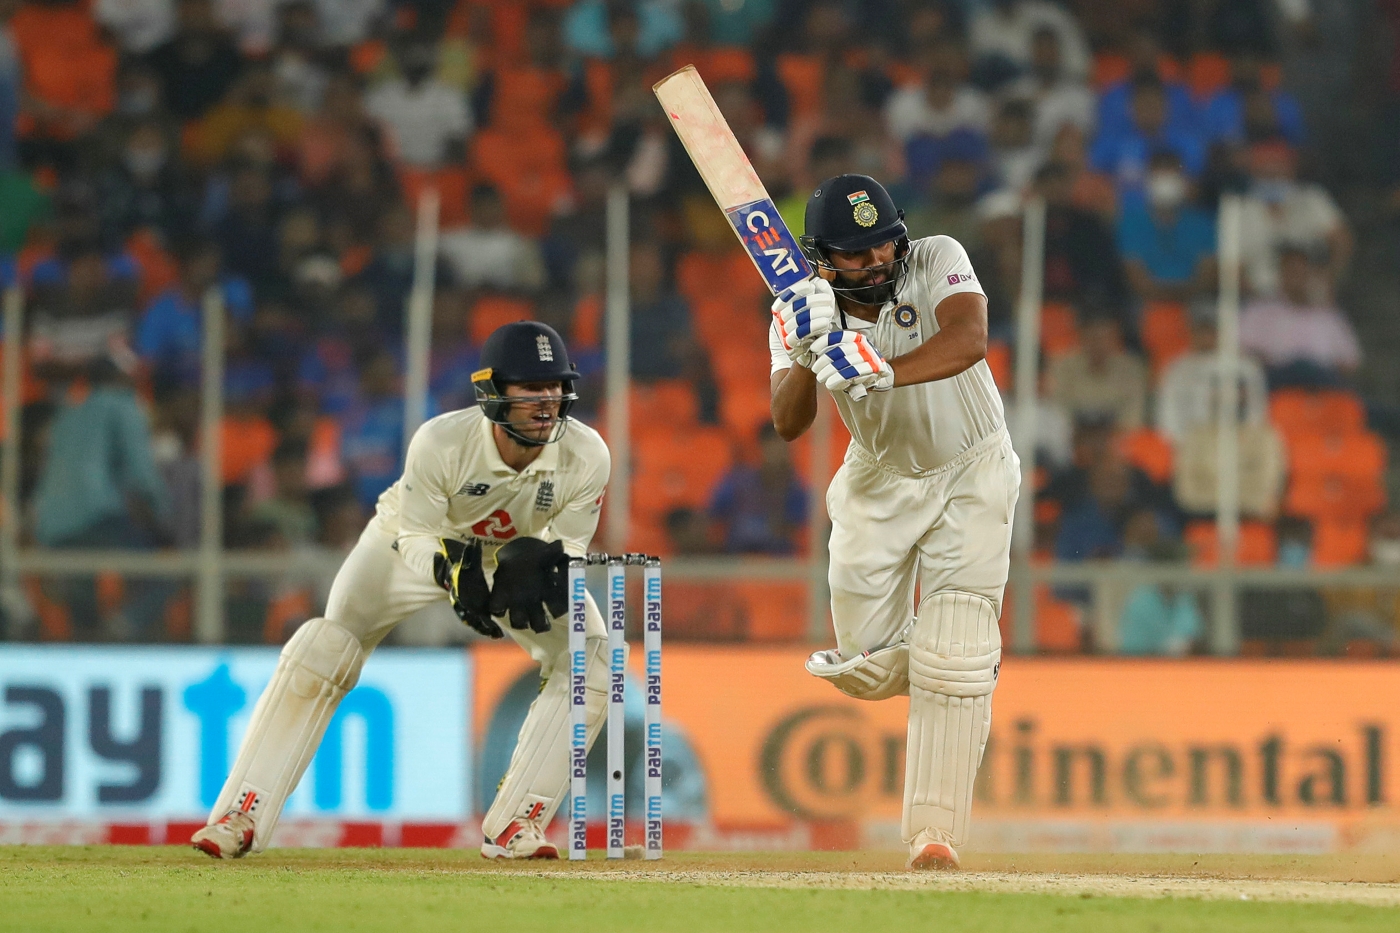 Sunil Gavaskar lauded Rohit Sharma for his batting skills | BCCI